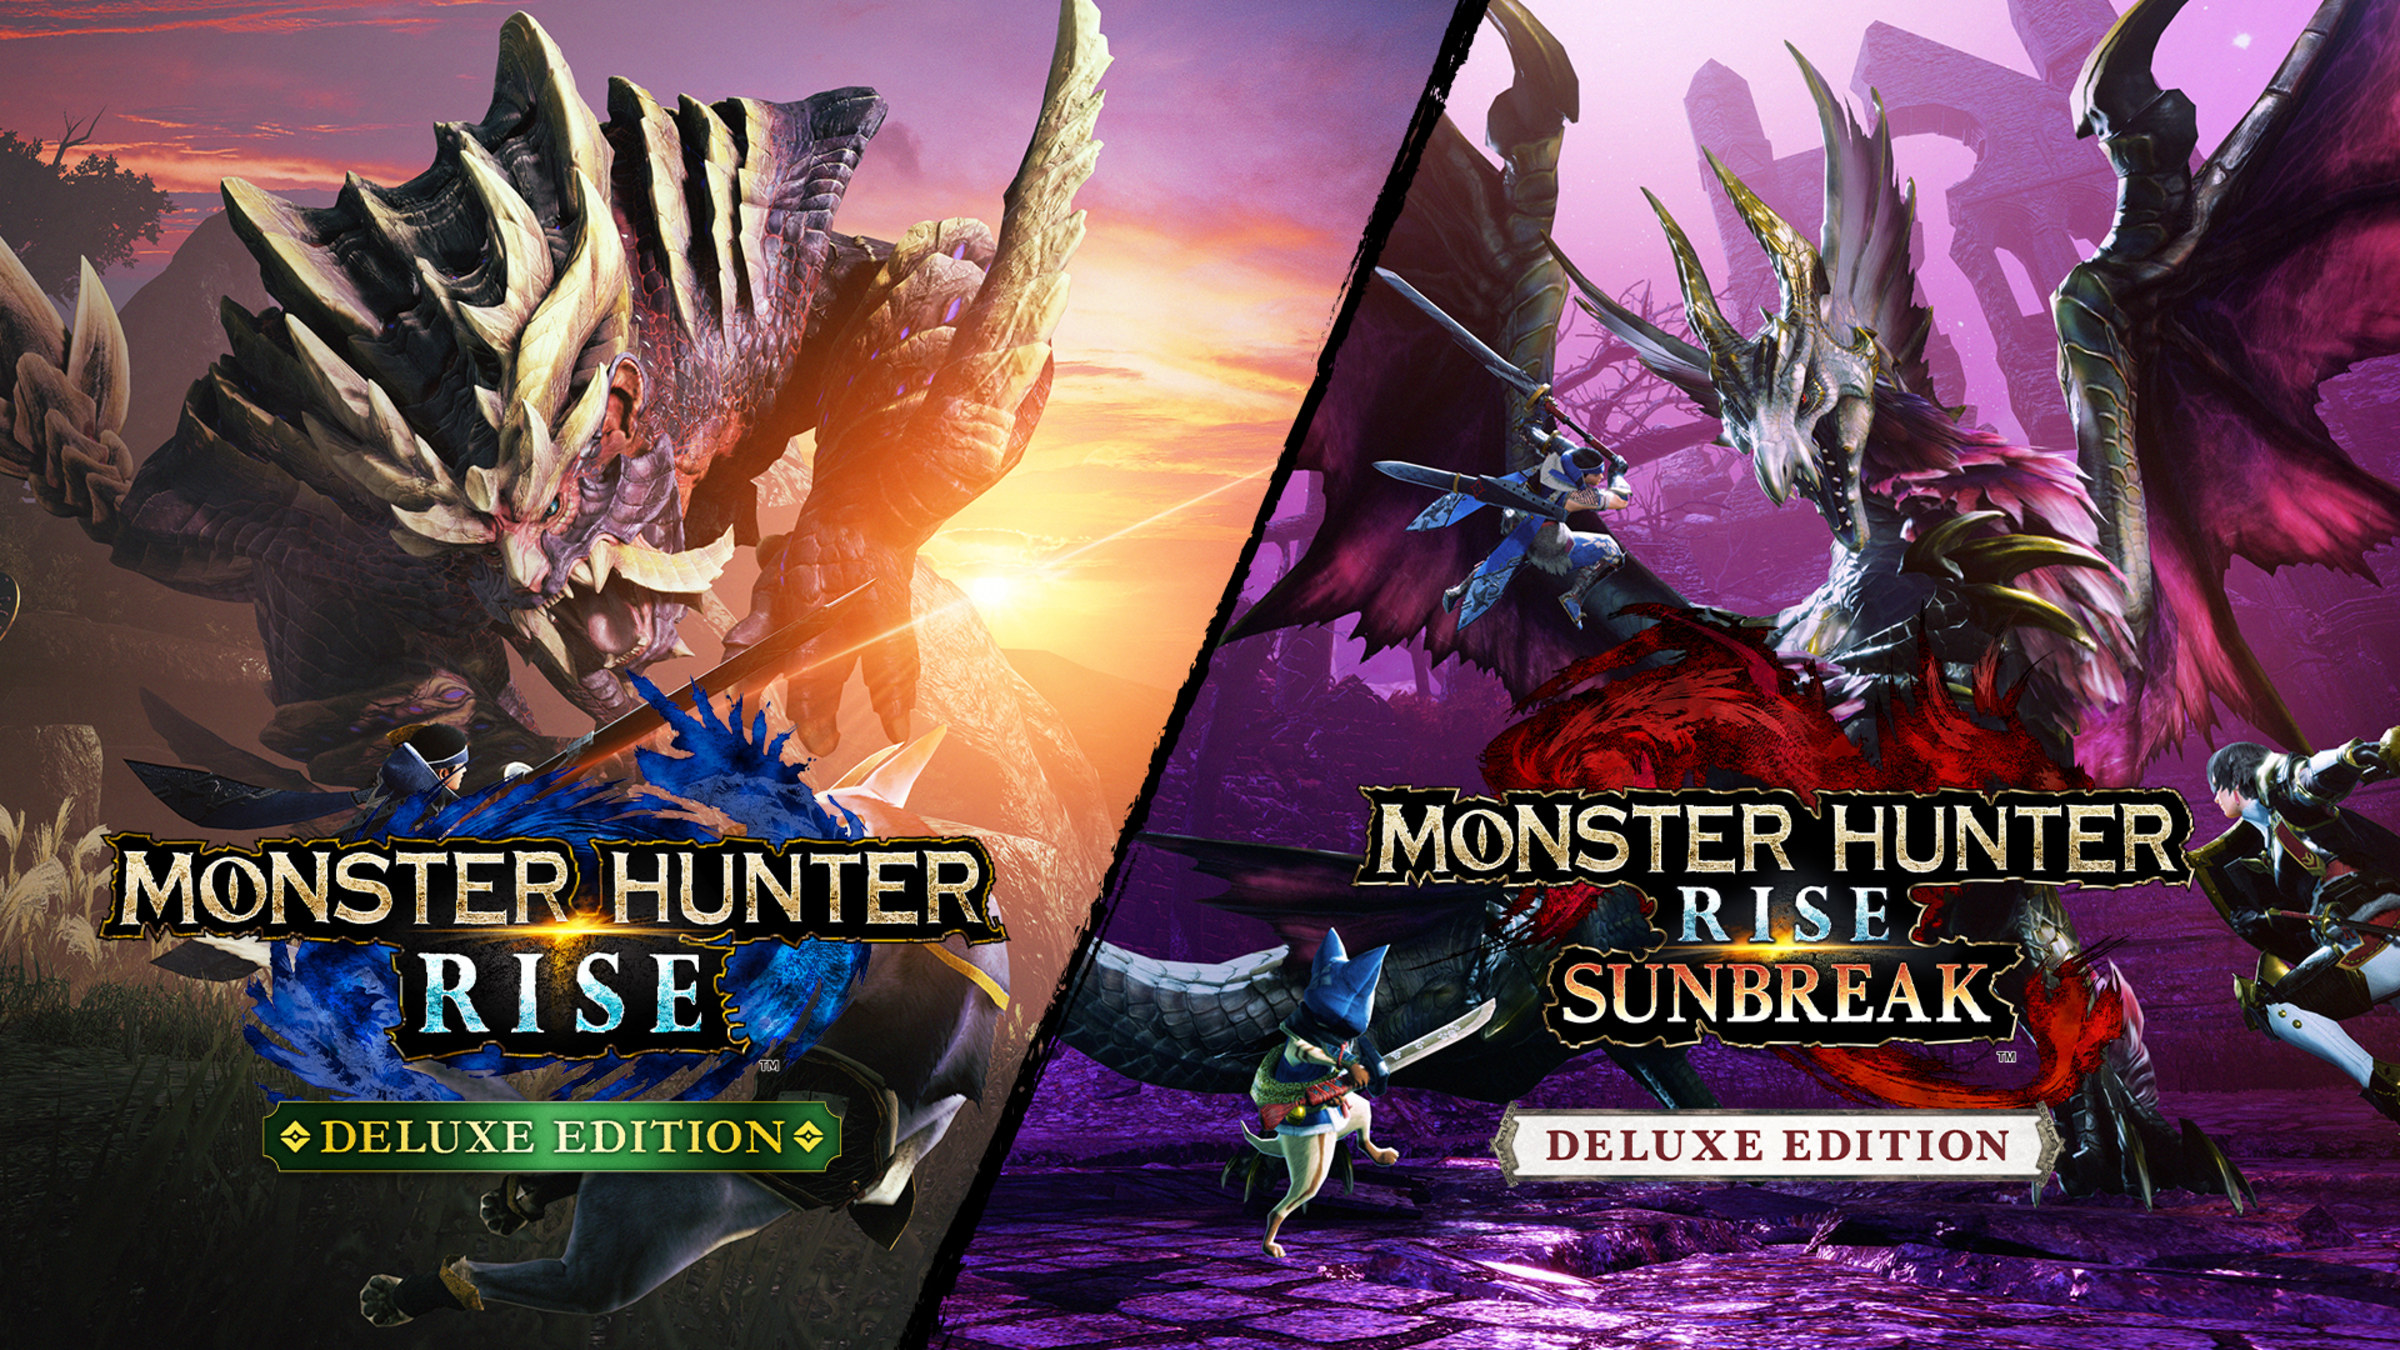 Monster Hunter Rise Deluxe Edition + Sunbreak Deluxe Deluxe Edition (PC Digital Download) $20.99 & More